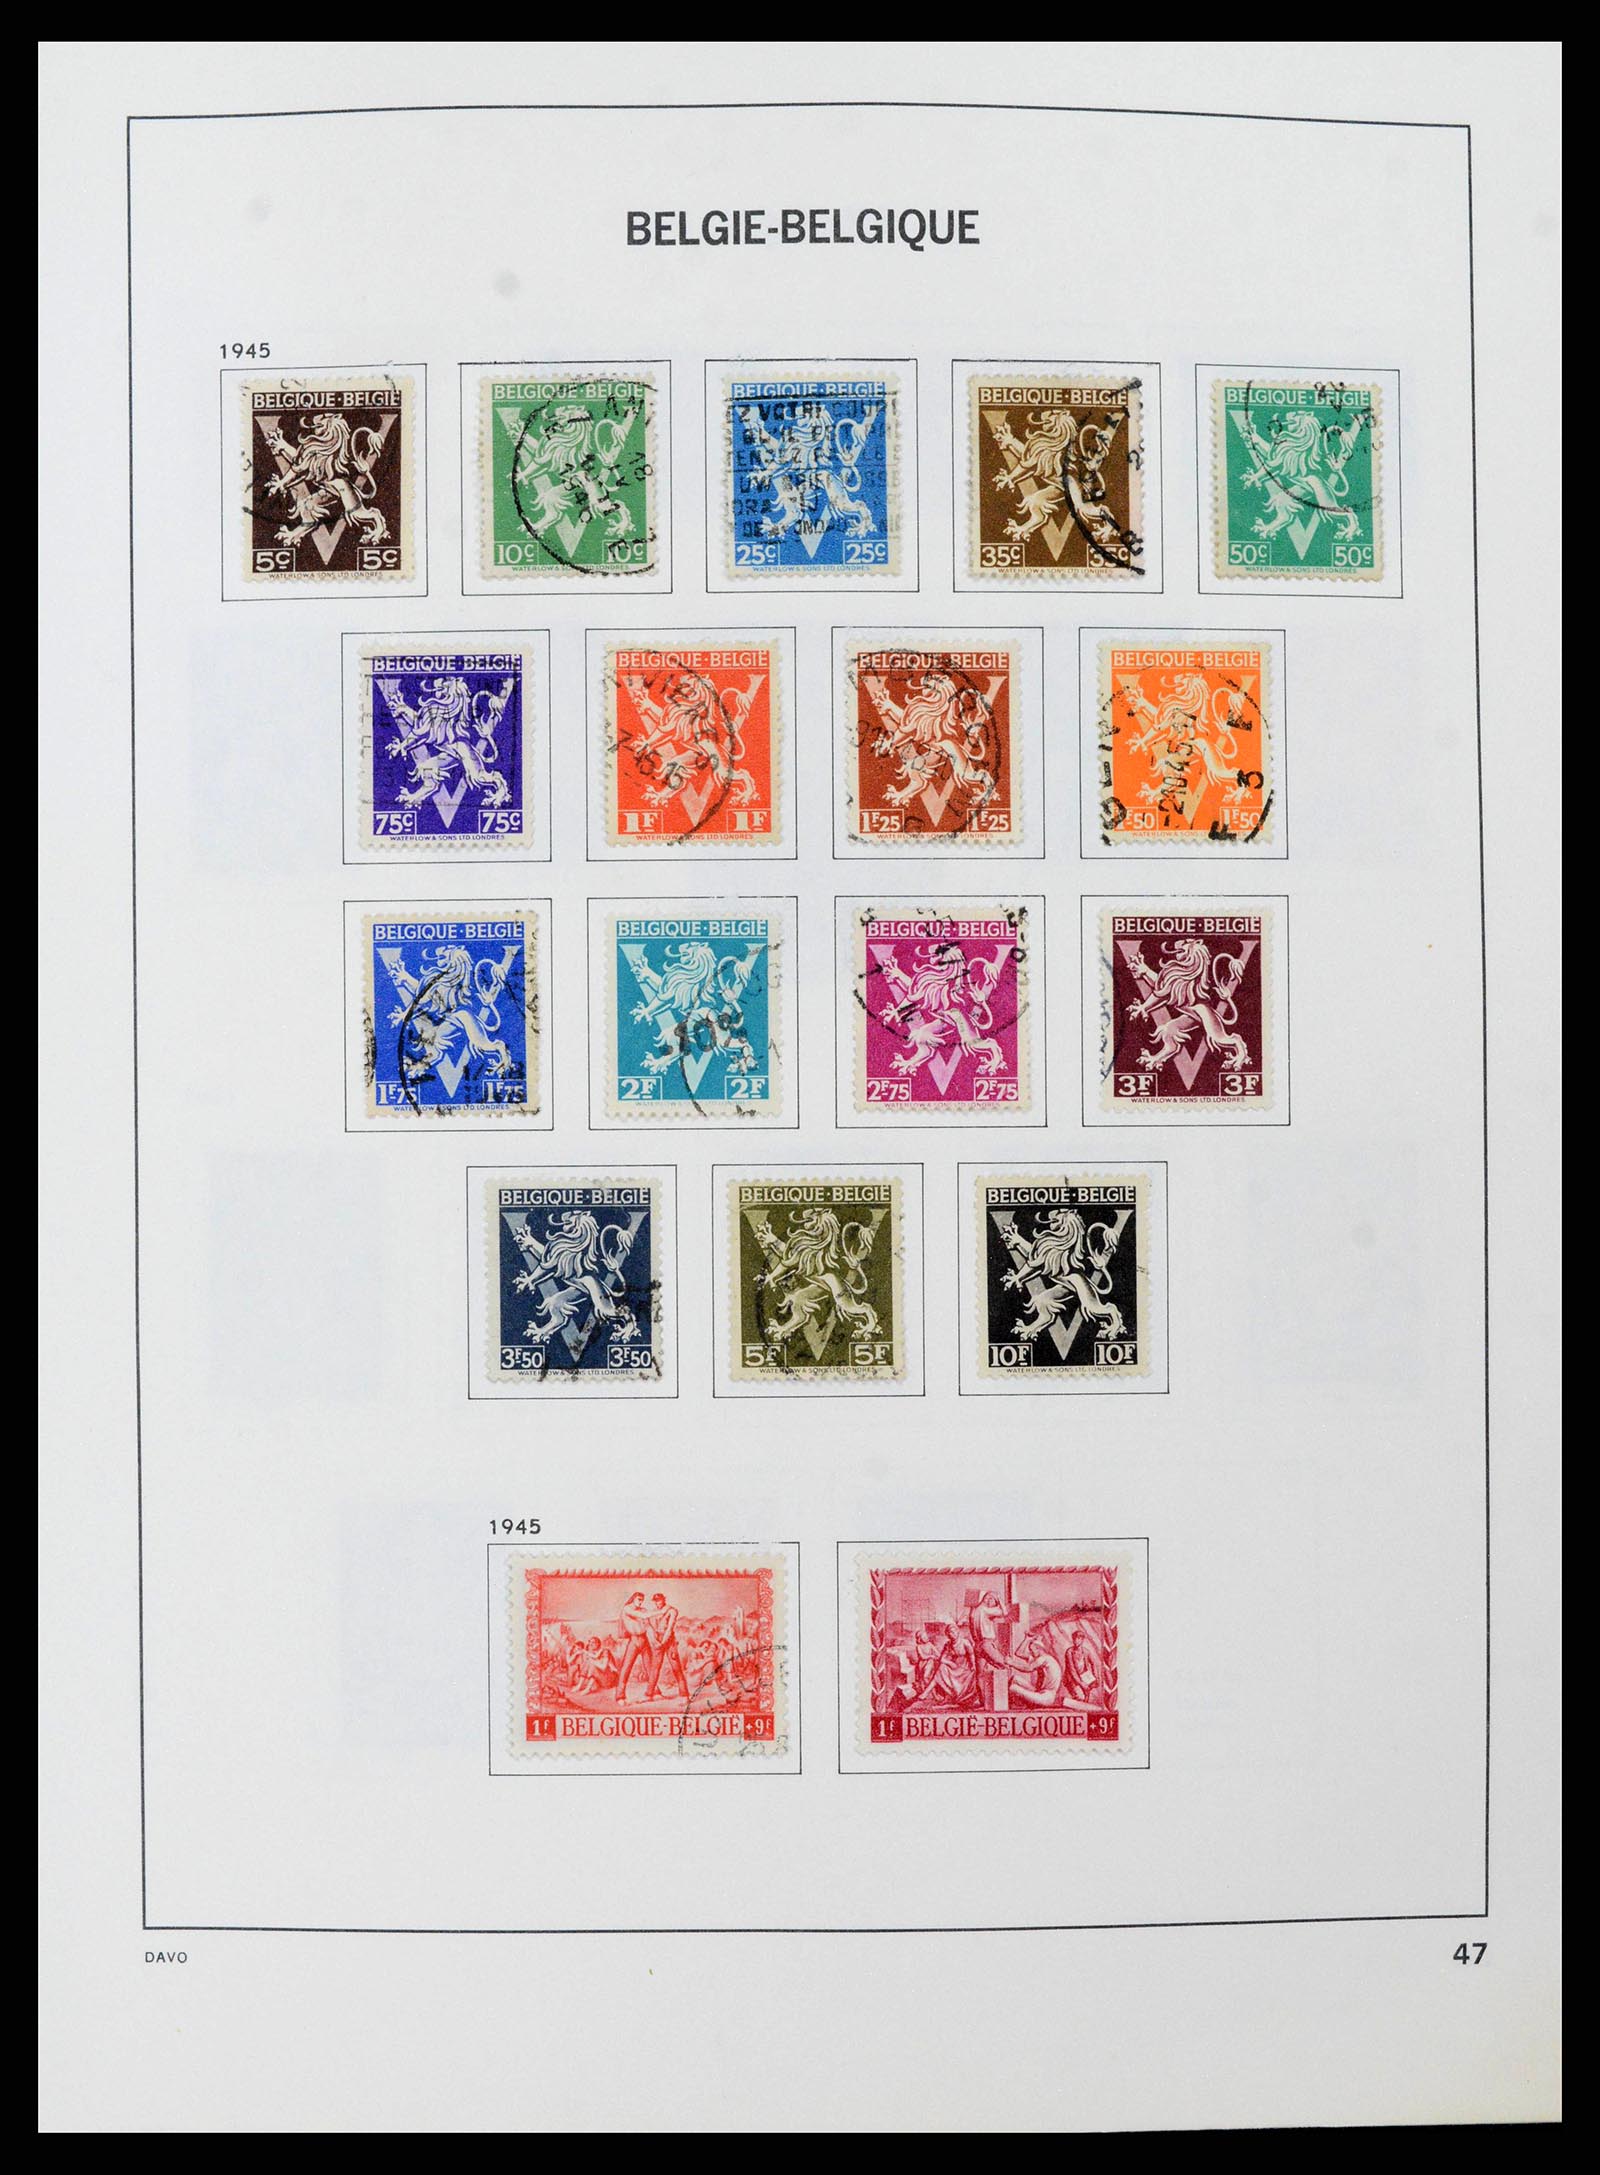 38663 0046 - Stamp collection 38663 Belgium 1849-2013.